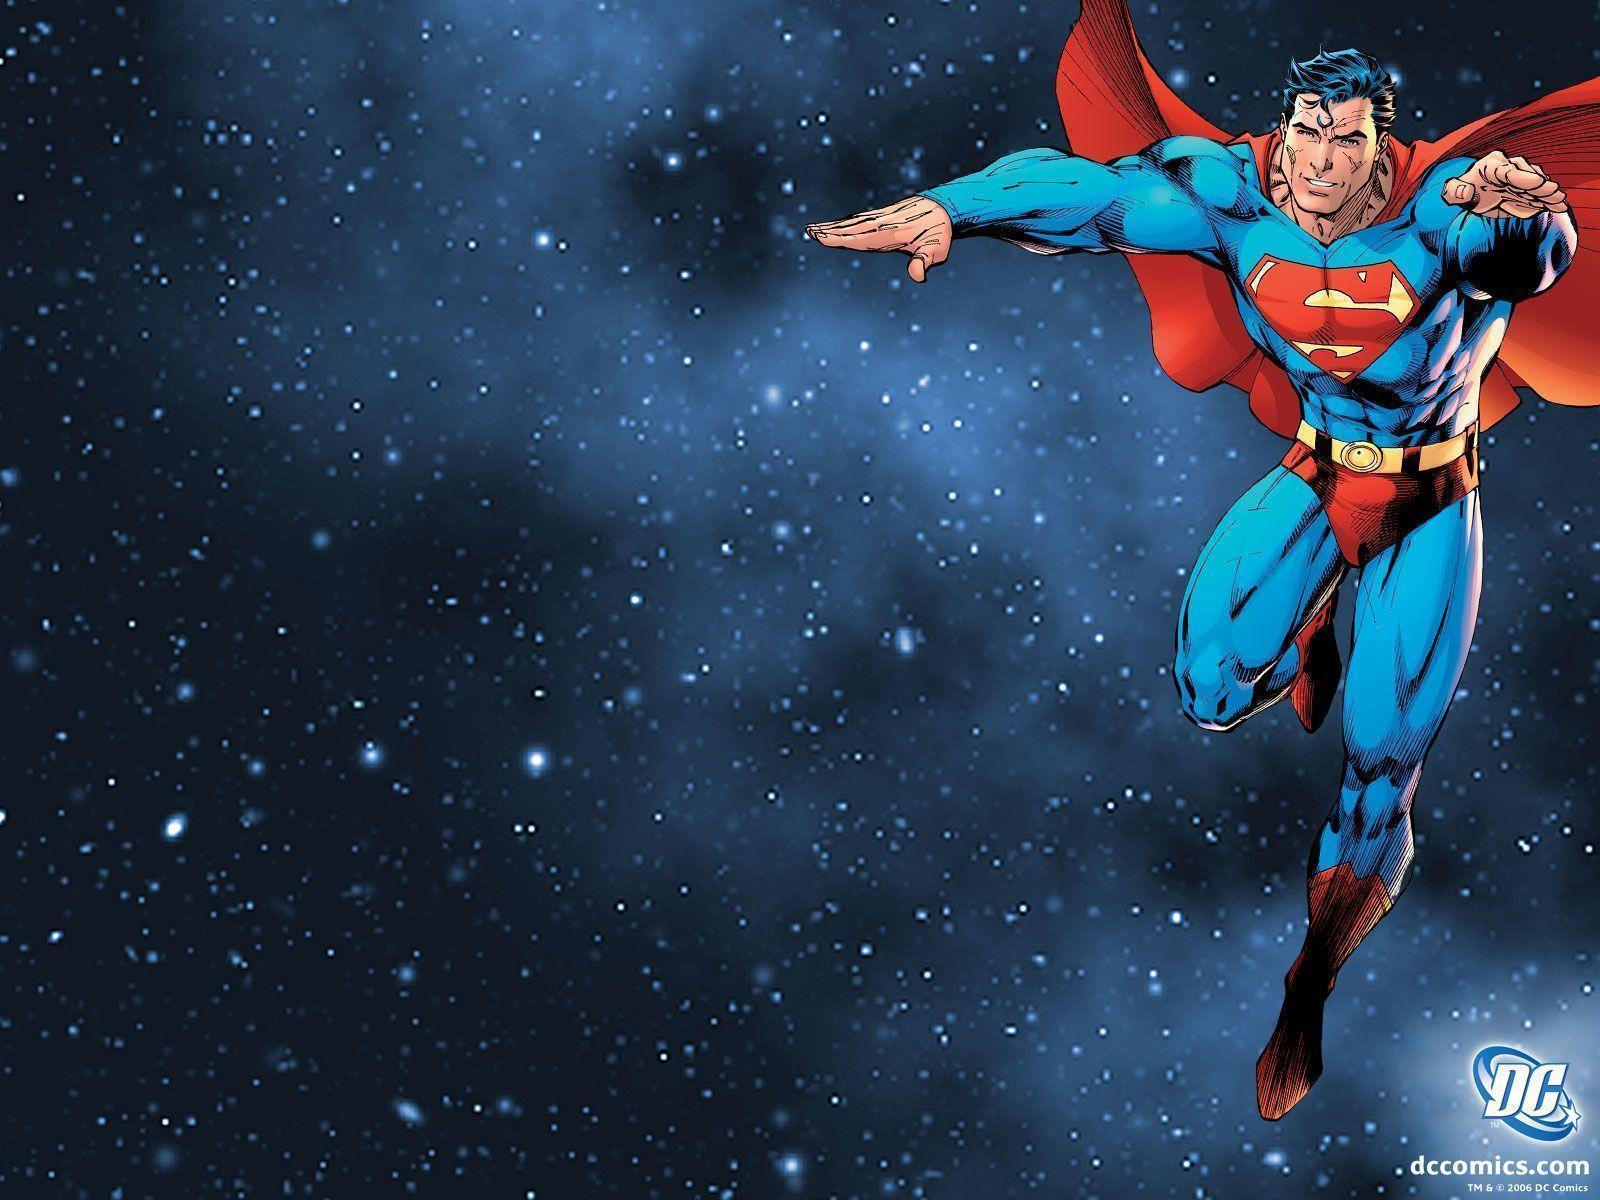 image For > Superman Comic Wallpaper